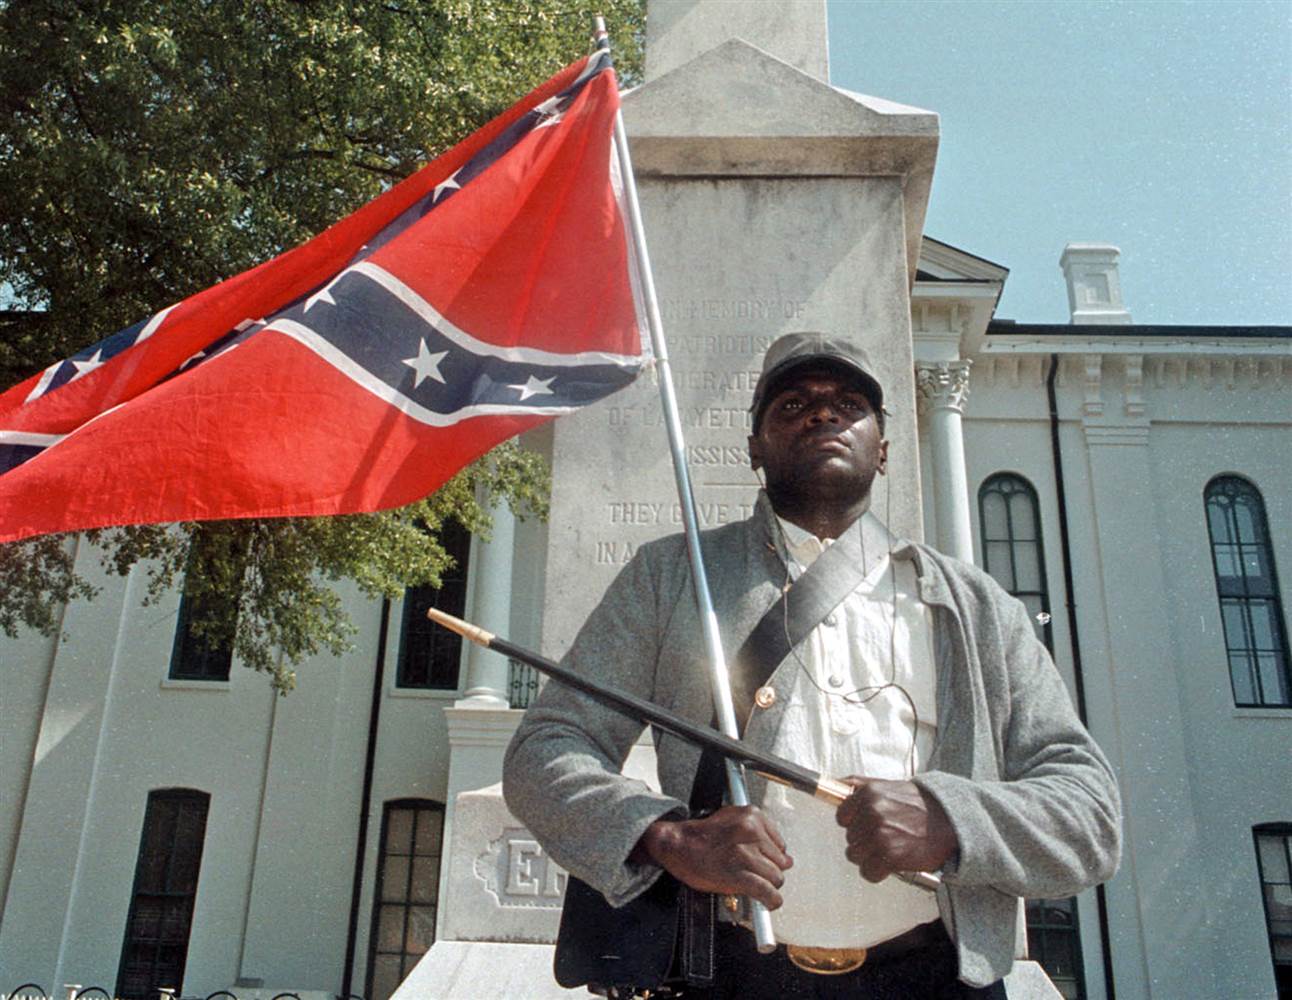 Black Confederates